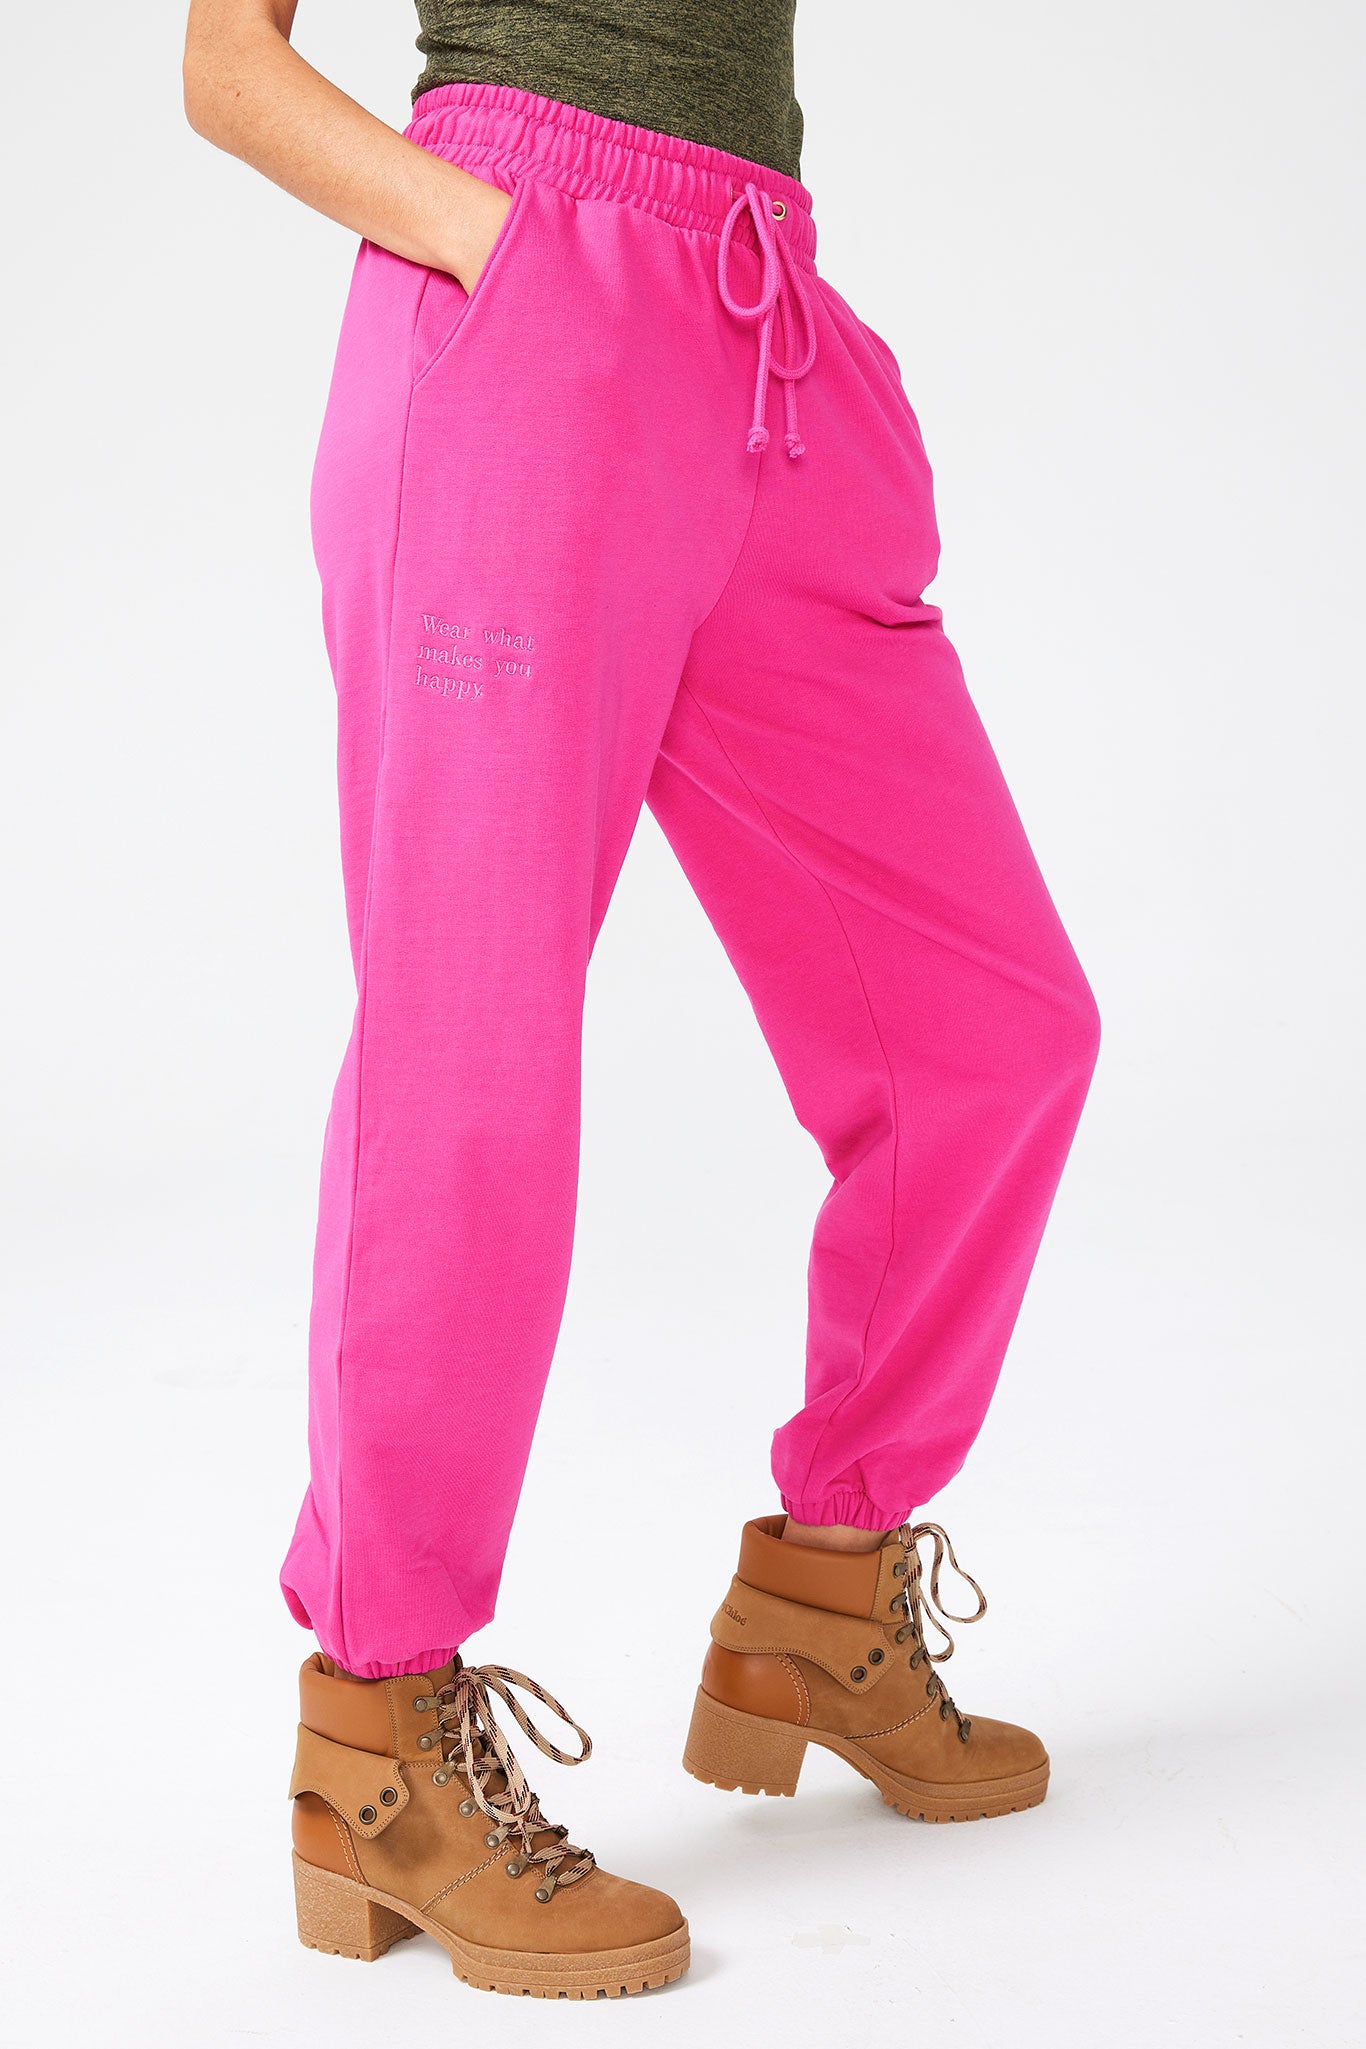 Terez x NY Forever Terez Pink Sweatpants